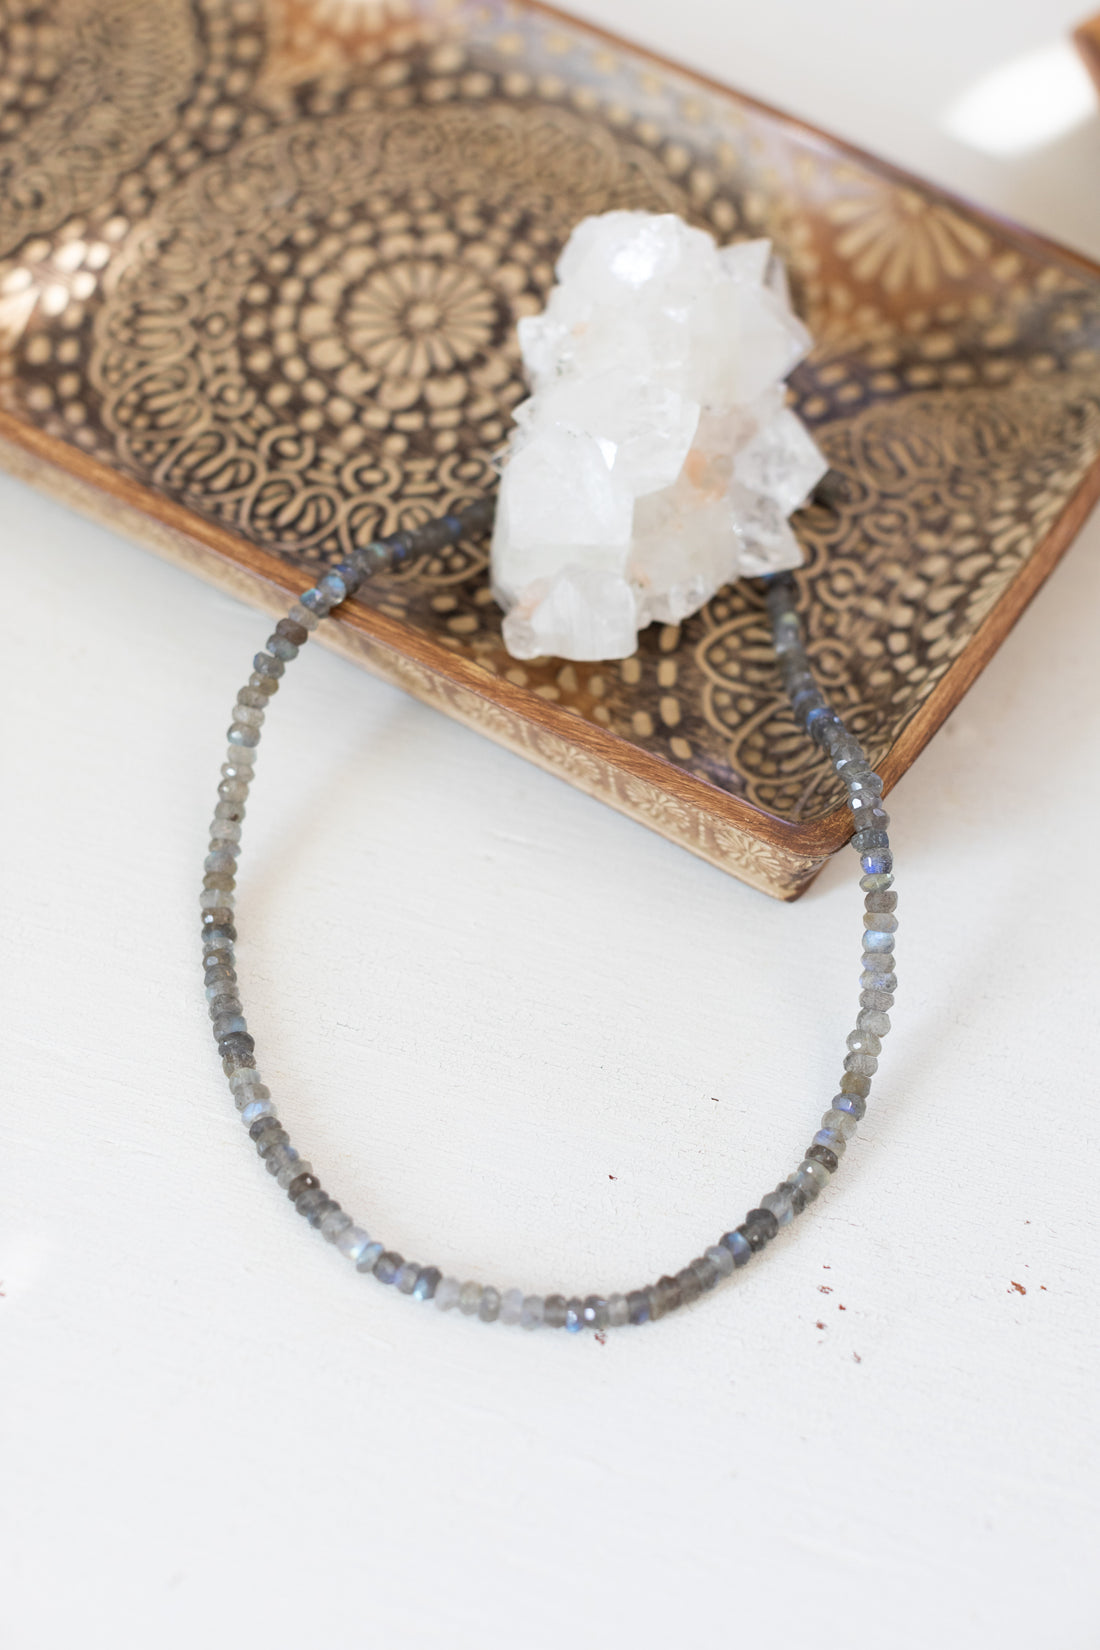 Labradorite - Large Beaded Necklace